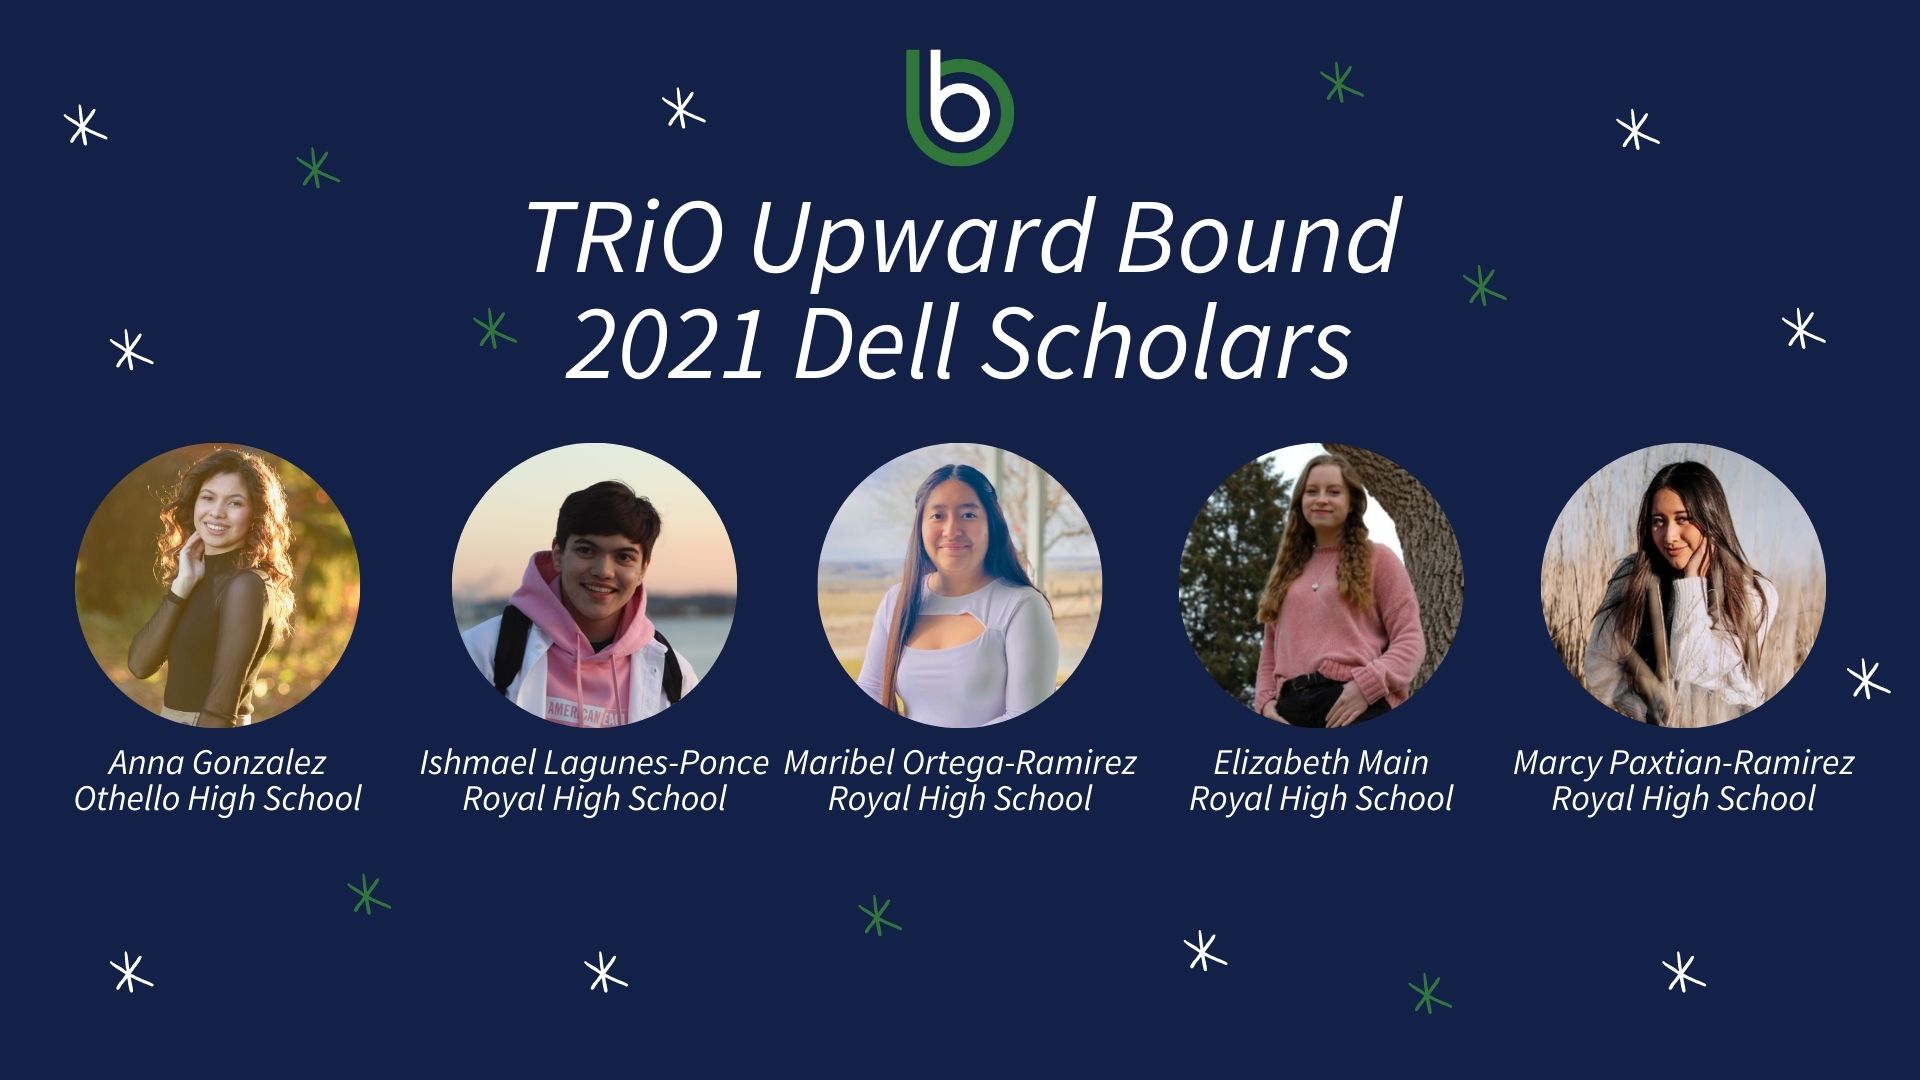 TRiO Upward Bound 2021 Dell Scholars Anna Gonzalez, Ishmael Lagunes-Ponce, Maribel Ortega-Ramirez, Elizabeth Main and Marcy Paxtian-Ramirez